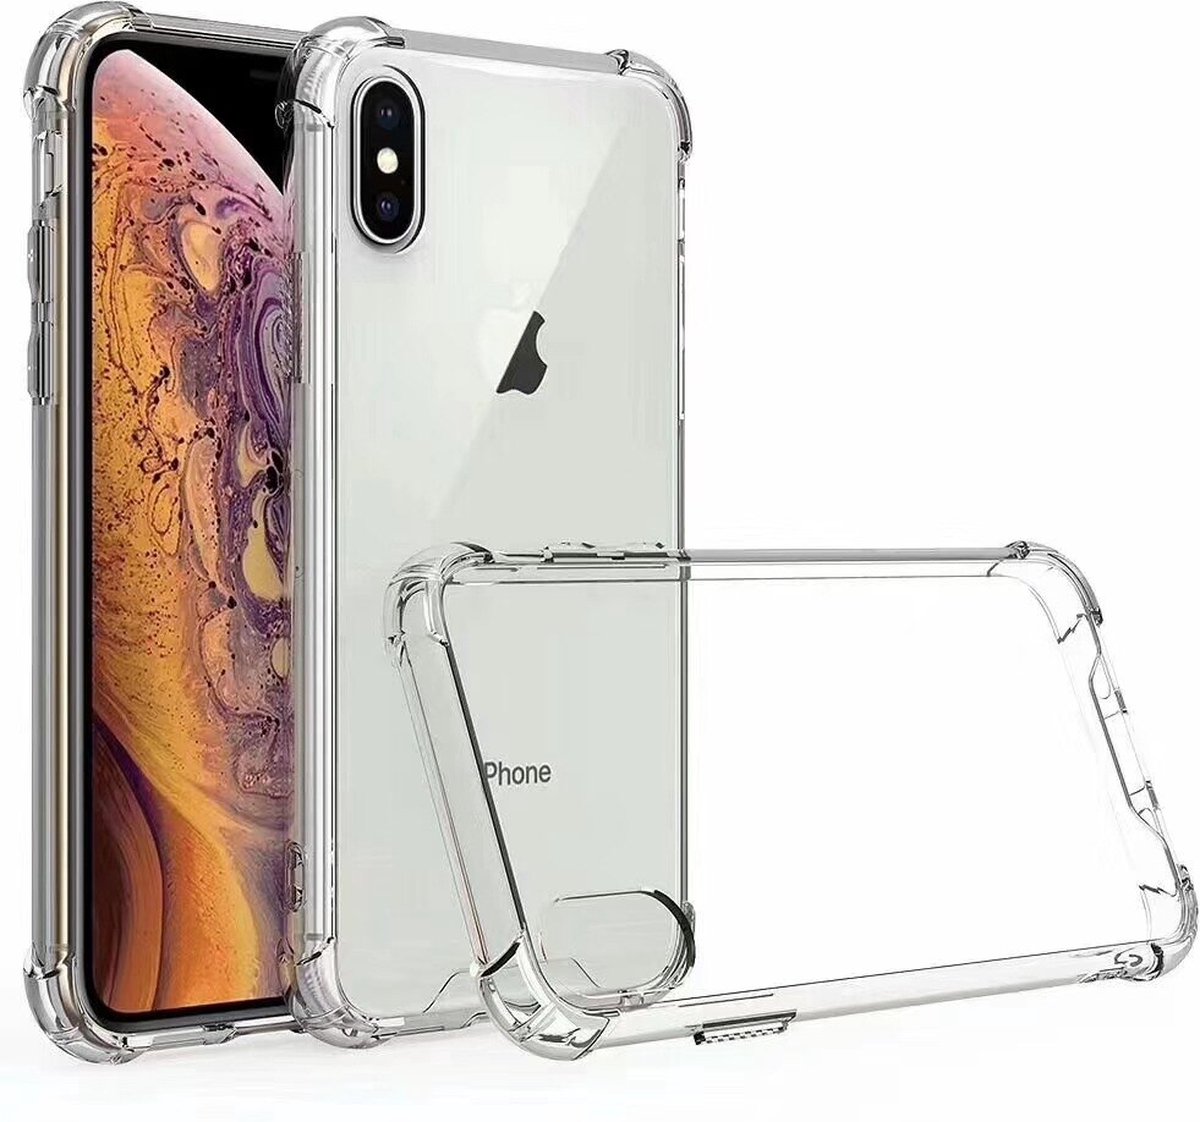 Massuzi iPhone X & XS hoesje - Shockproof cases - Case - Transparant - Cover